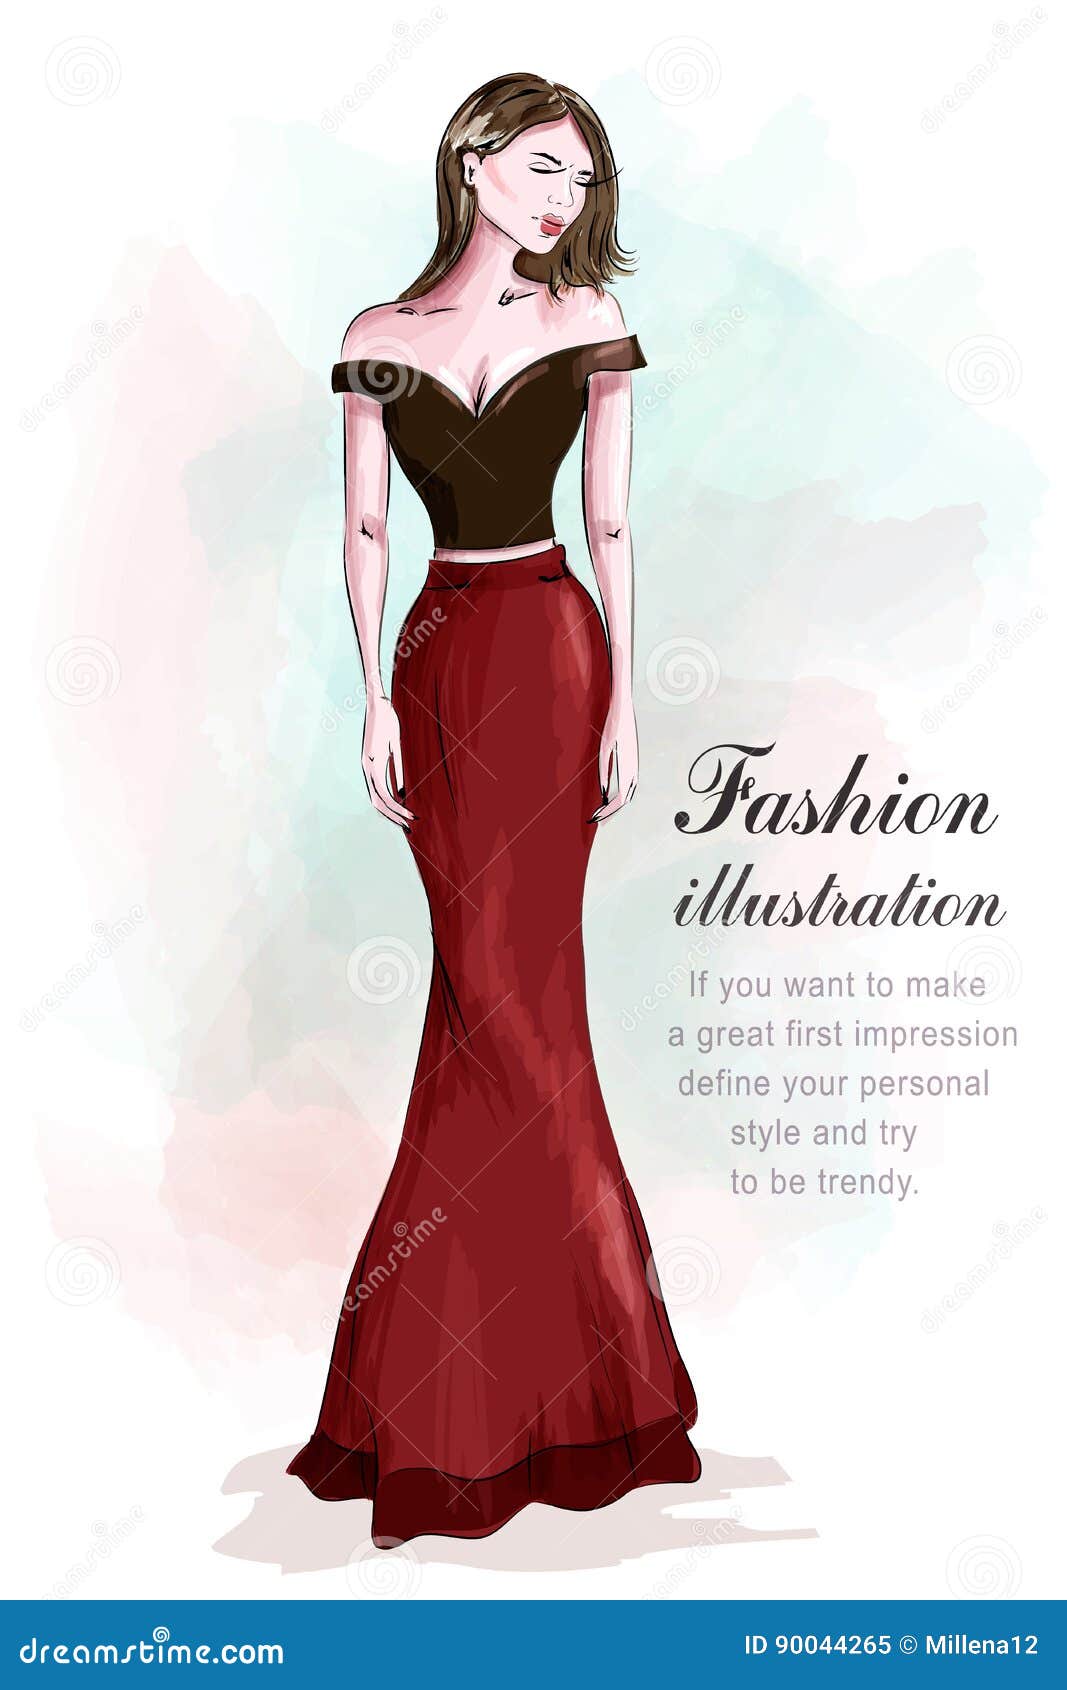 Simple design😃😍 - Riza Gown design | Facebook